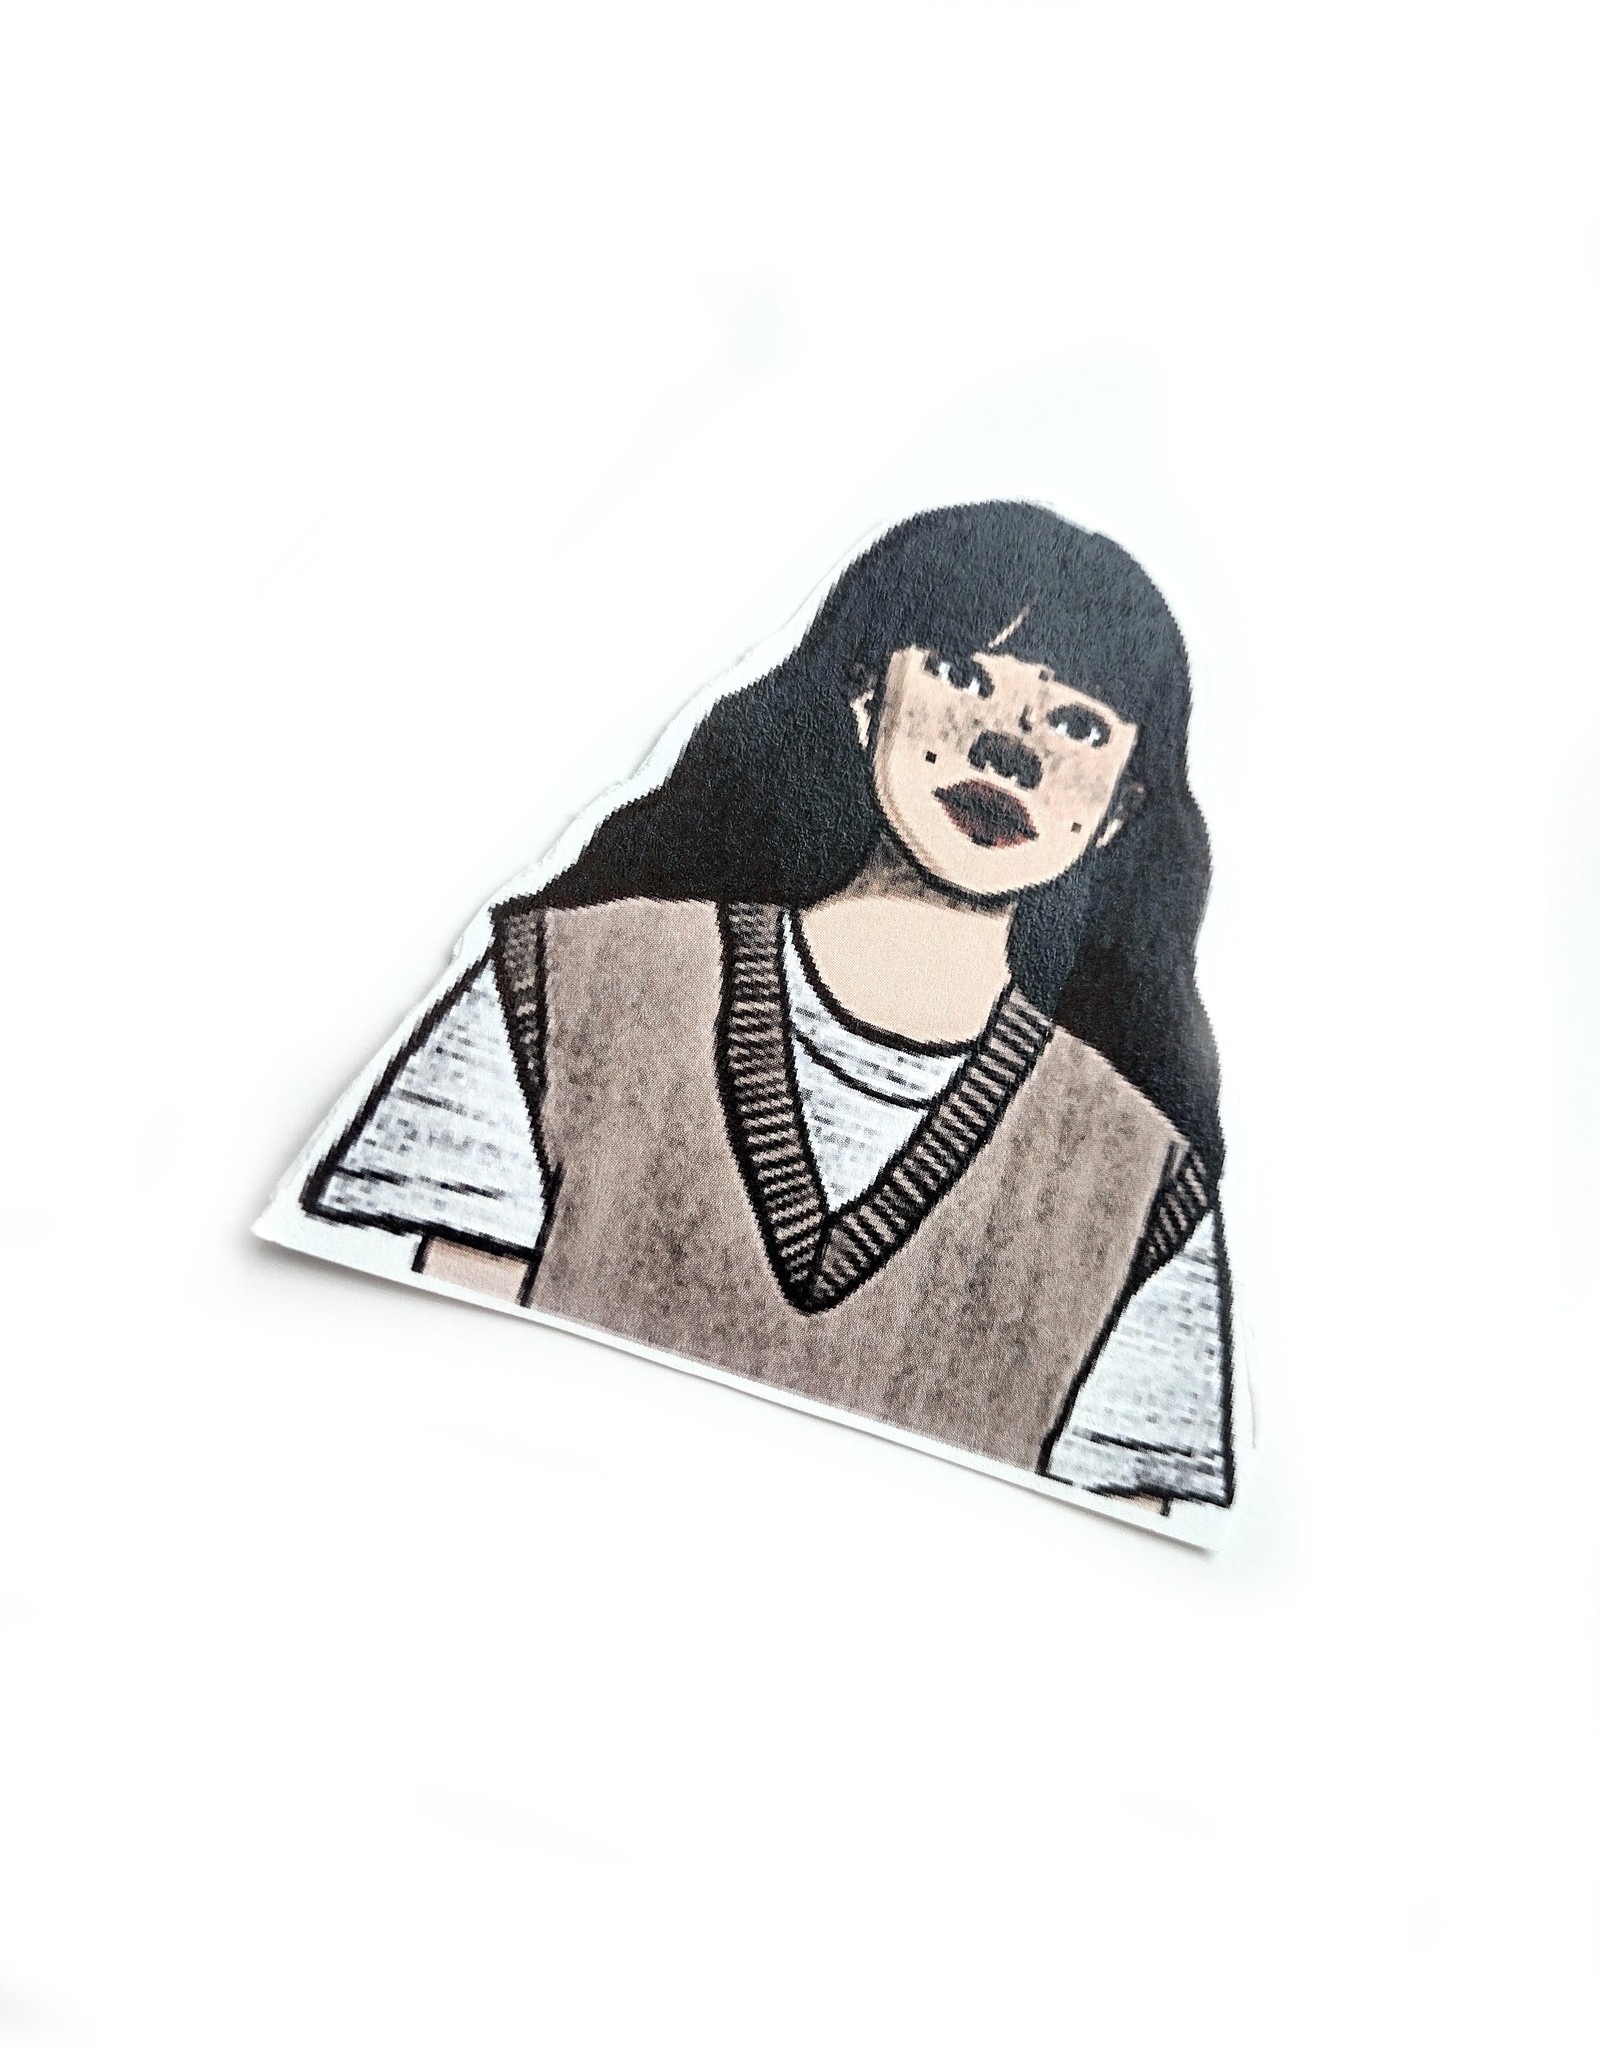 Jada Russell "Aesthetic Girl" sticker by Jada Russell